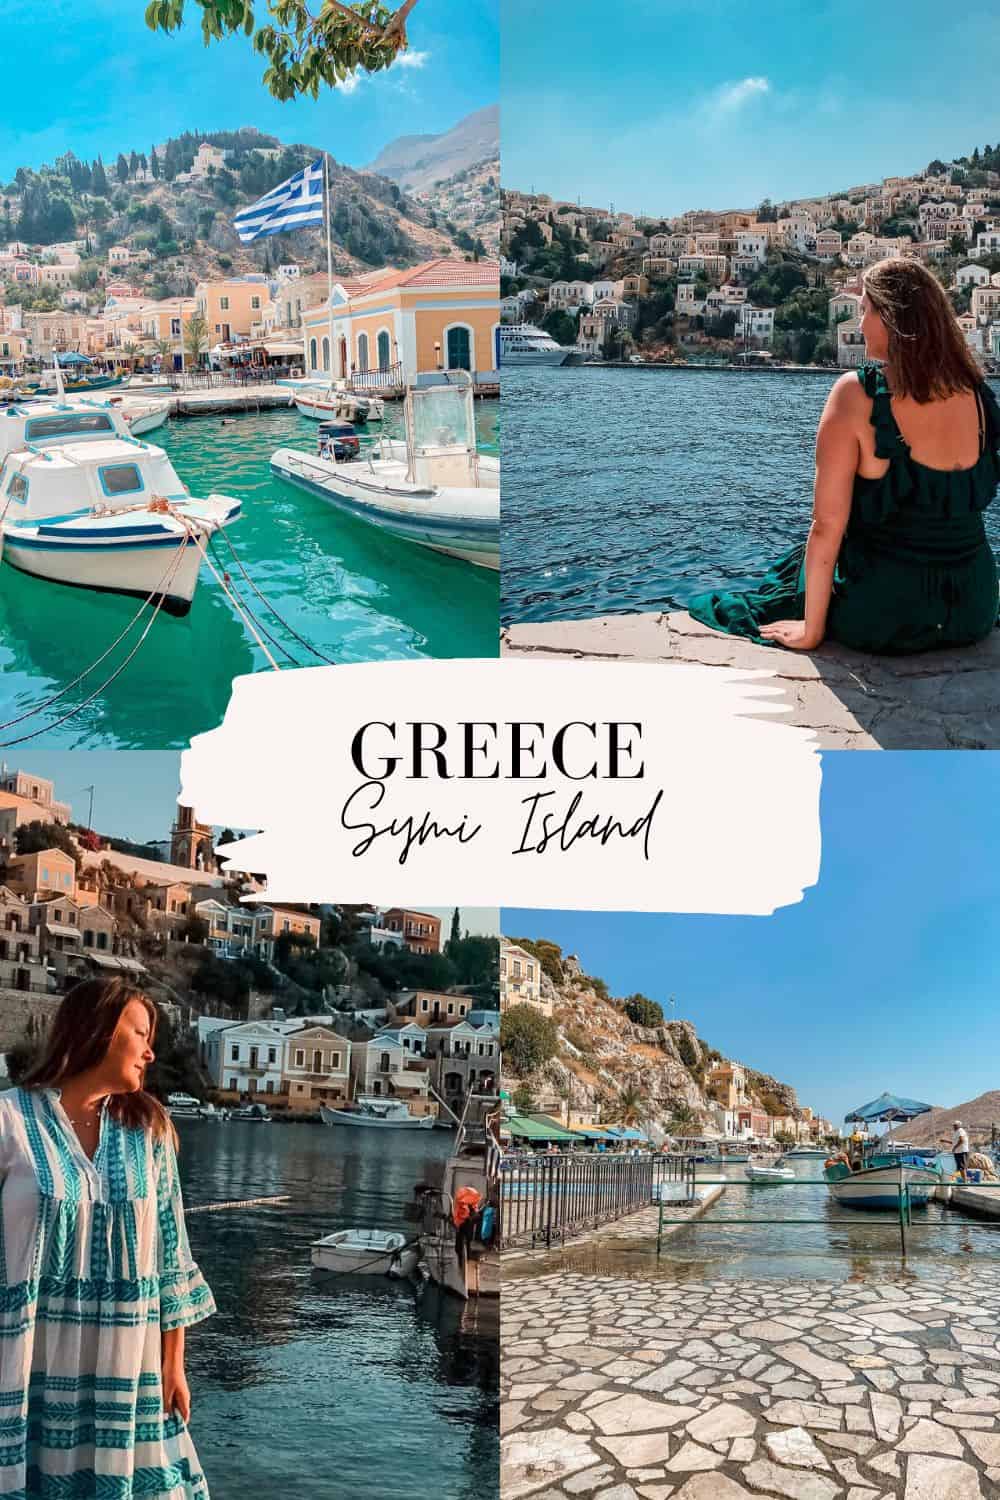 Greek island itinerary for Symi, Greece!